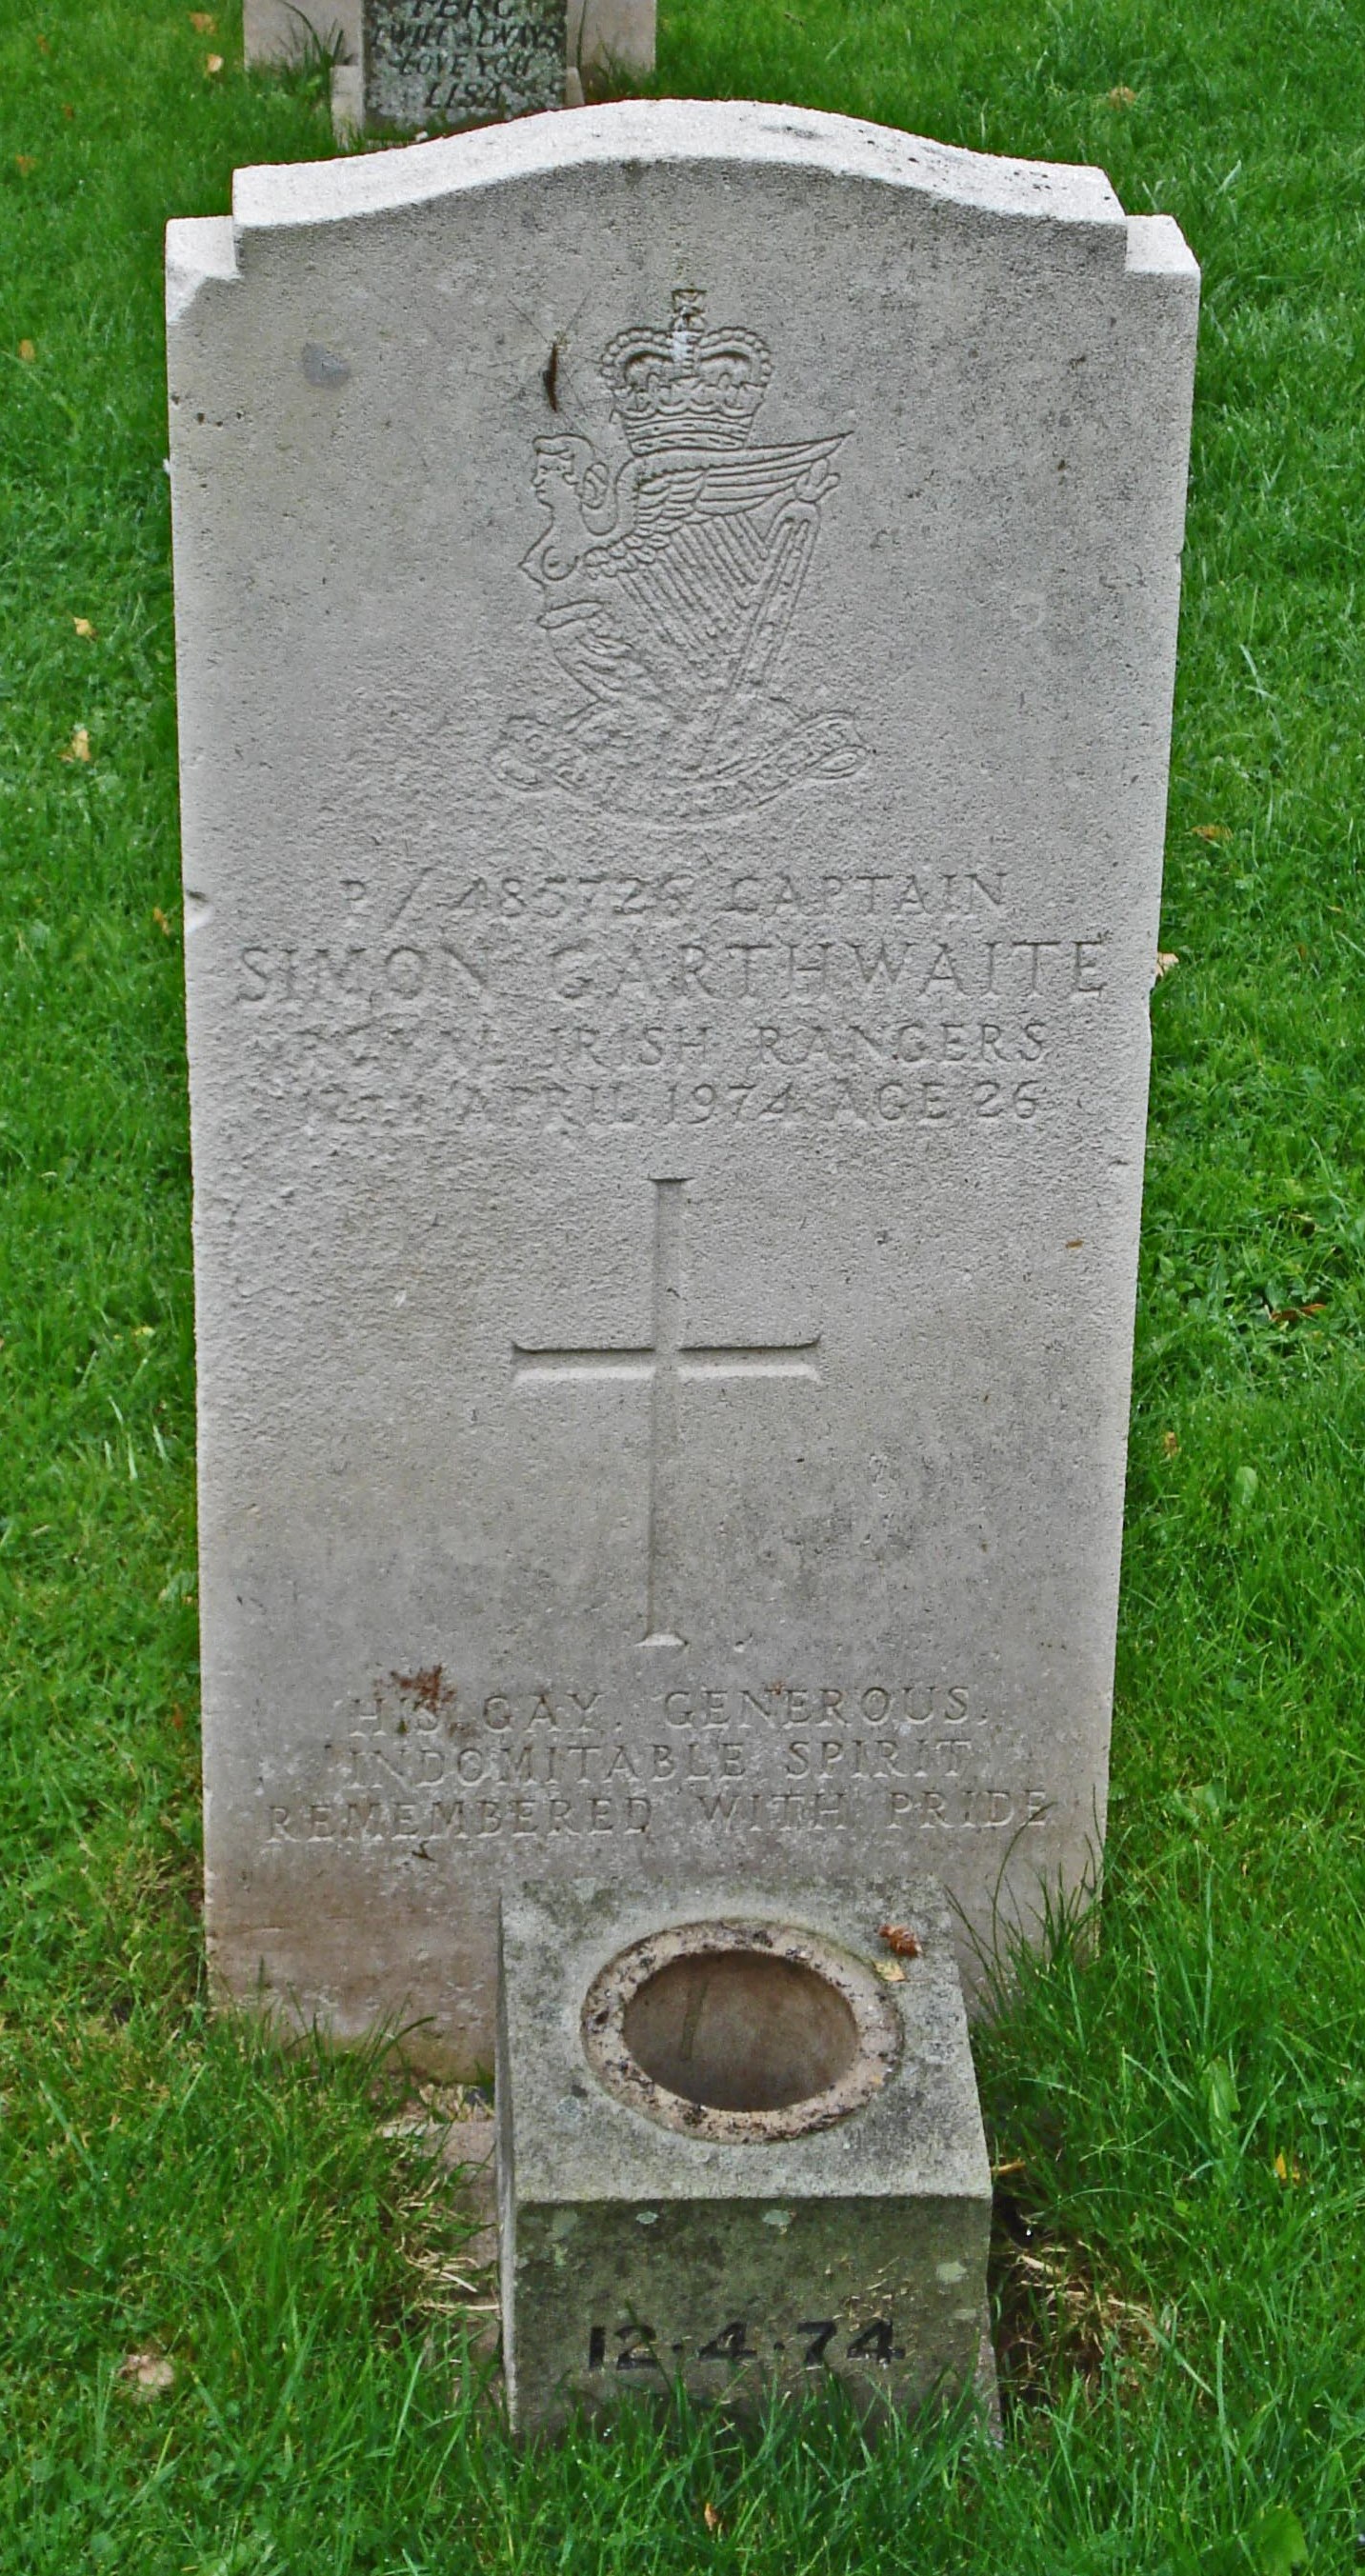 S. Garthwaite (Grave)